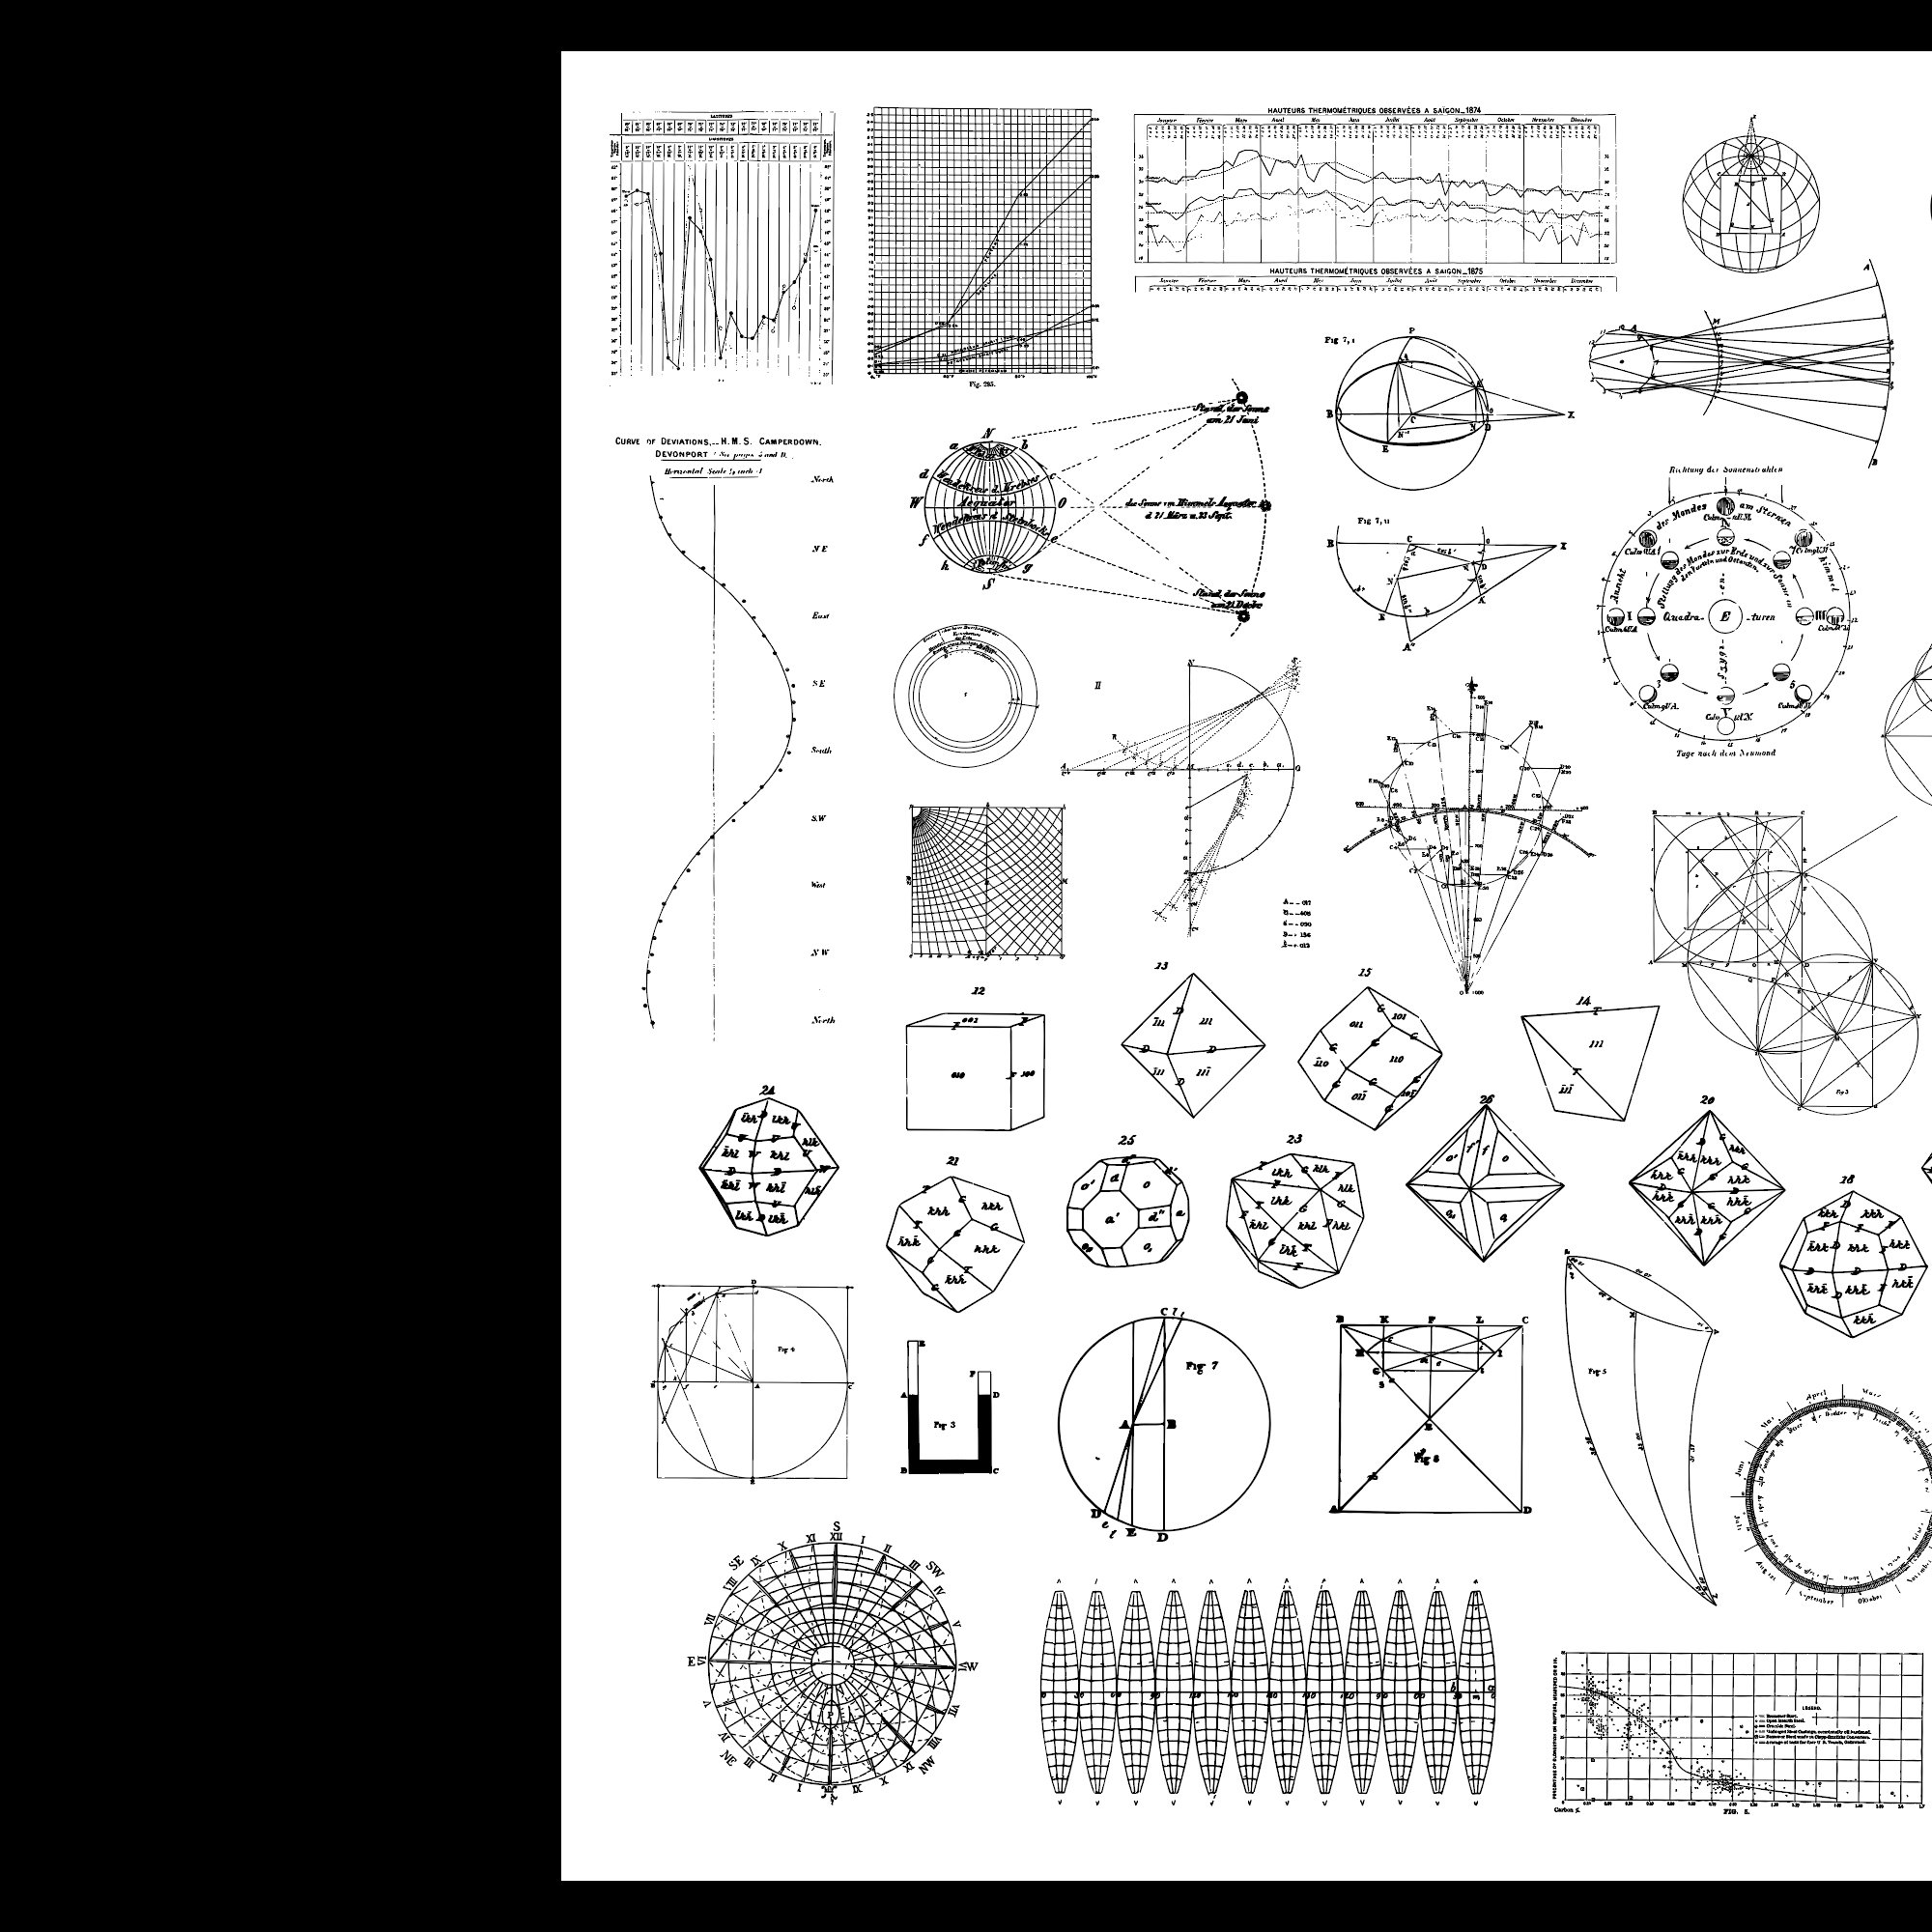 1363 数学物理公式手绘图表矢量素材包 Fox Rockett Studio – Graphs & Diagrams